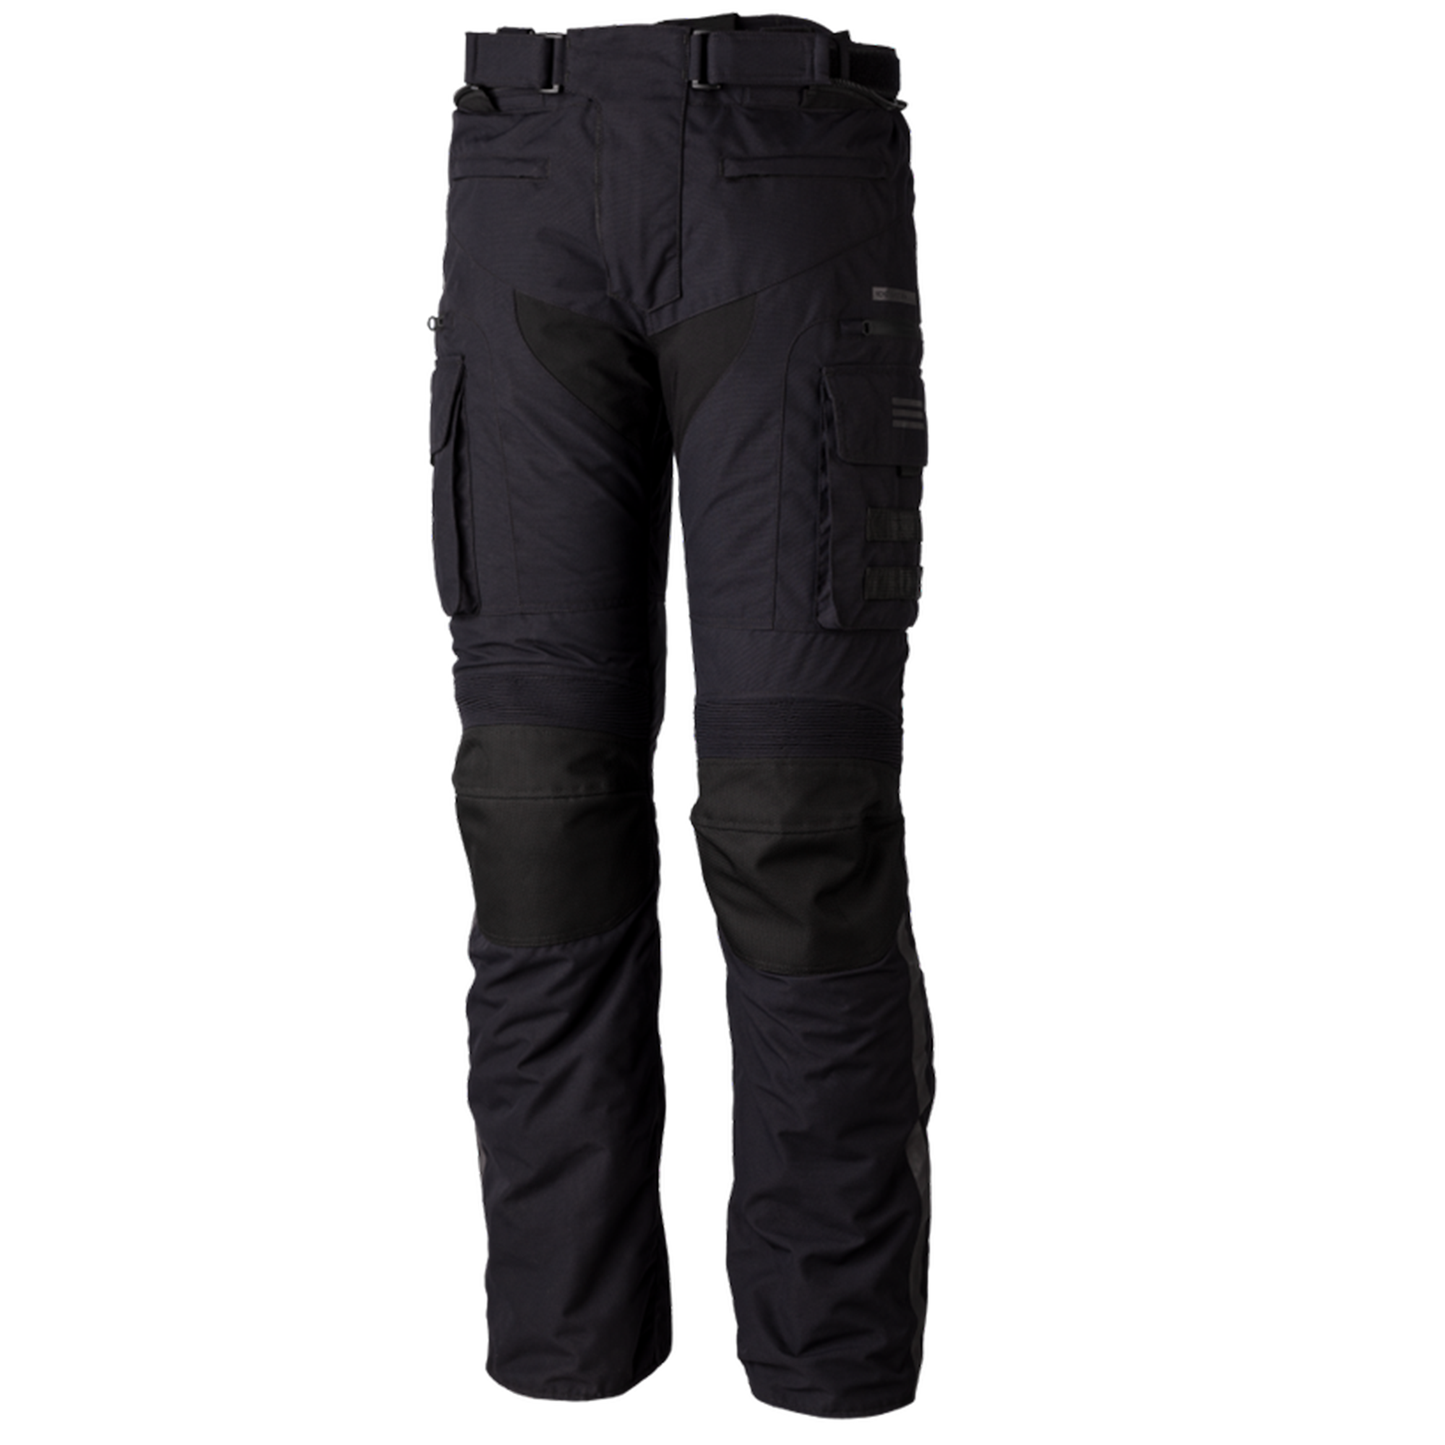 RST Ambush CE Men’s Textile Short Leg Jean - Black (3025)